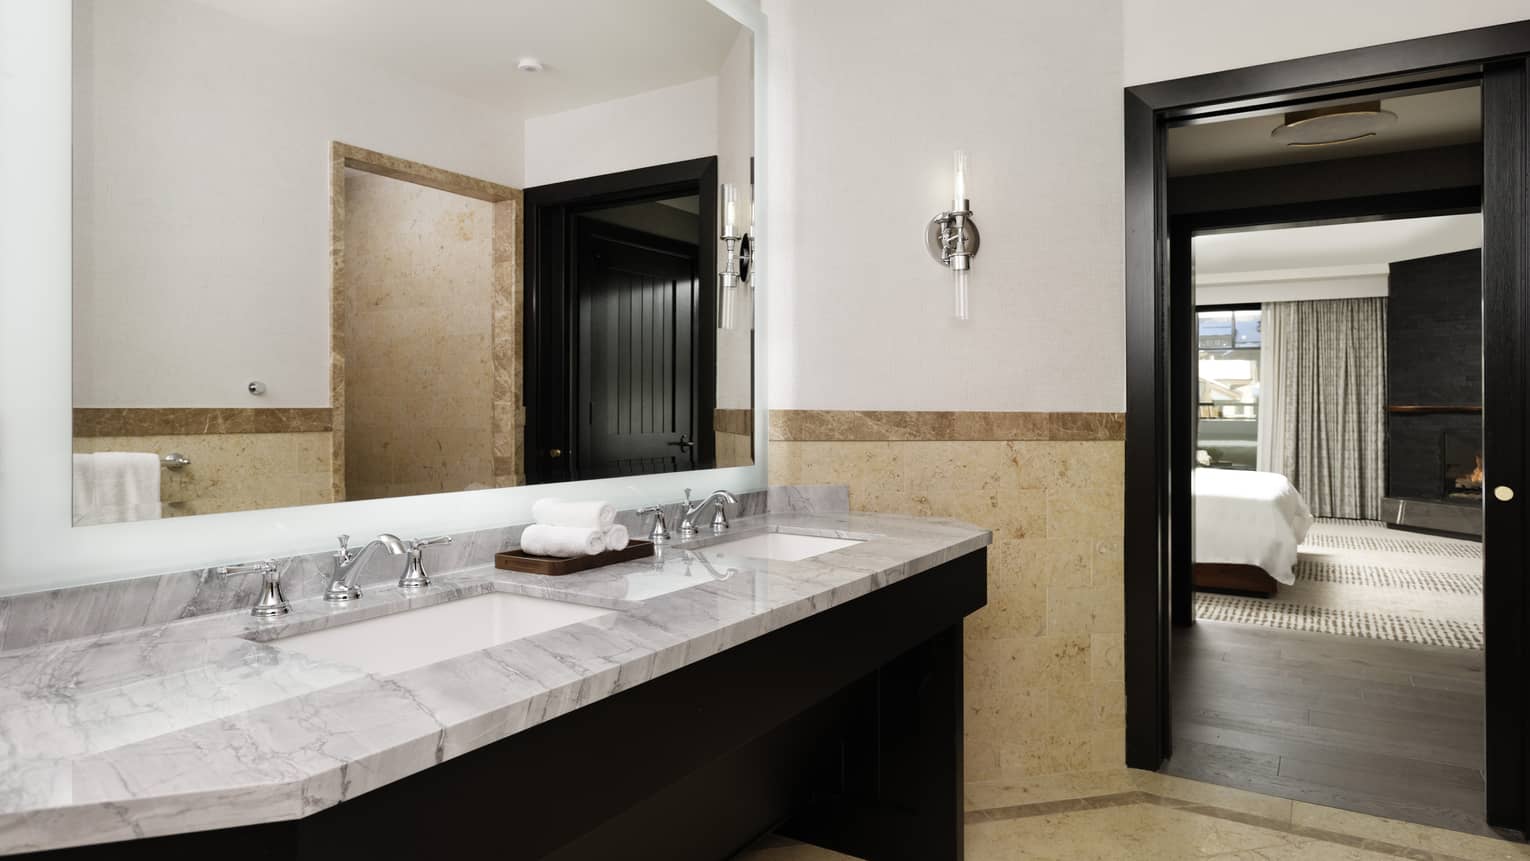 Bathroom with marble double vanity, beige limestone floors and walls